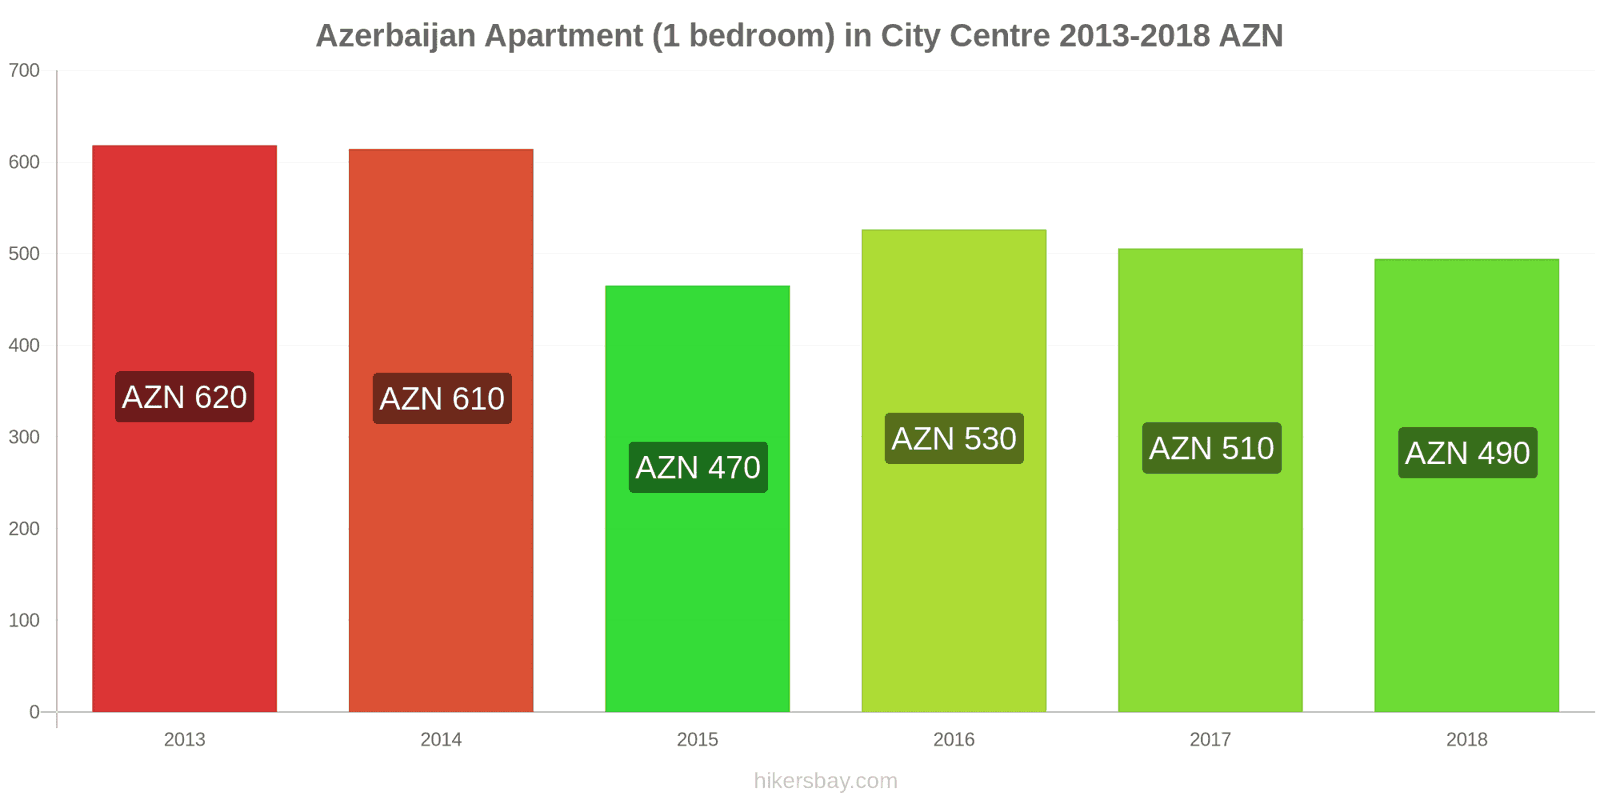 Azerbaijan price changes Apartment (1 bedroom) in city centre hikersbay.com